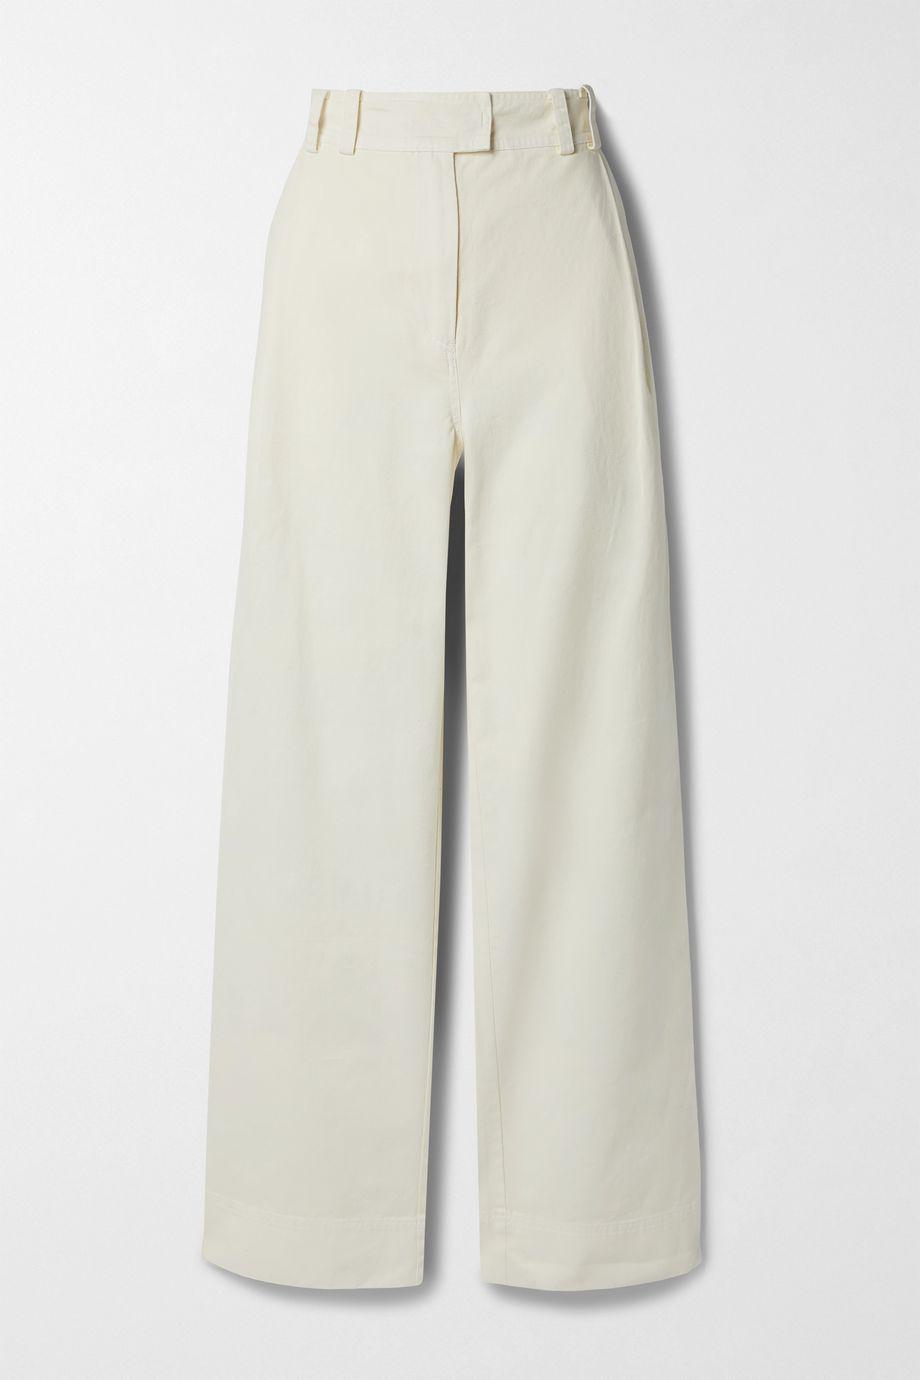 Manon cotton-twill wide-leg pants by APIECE APART